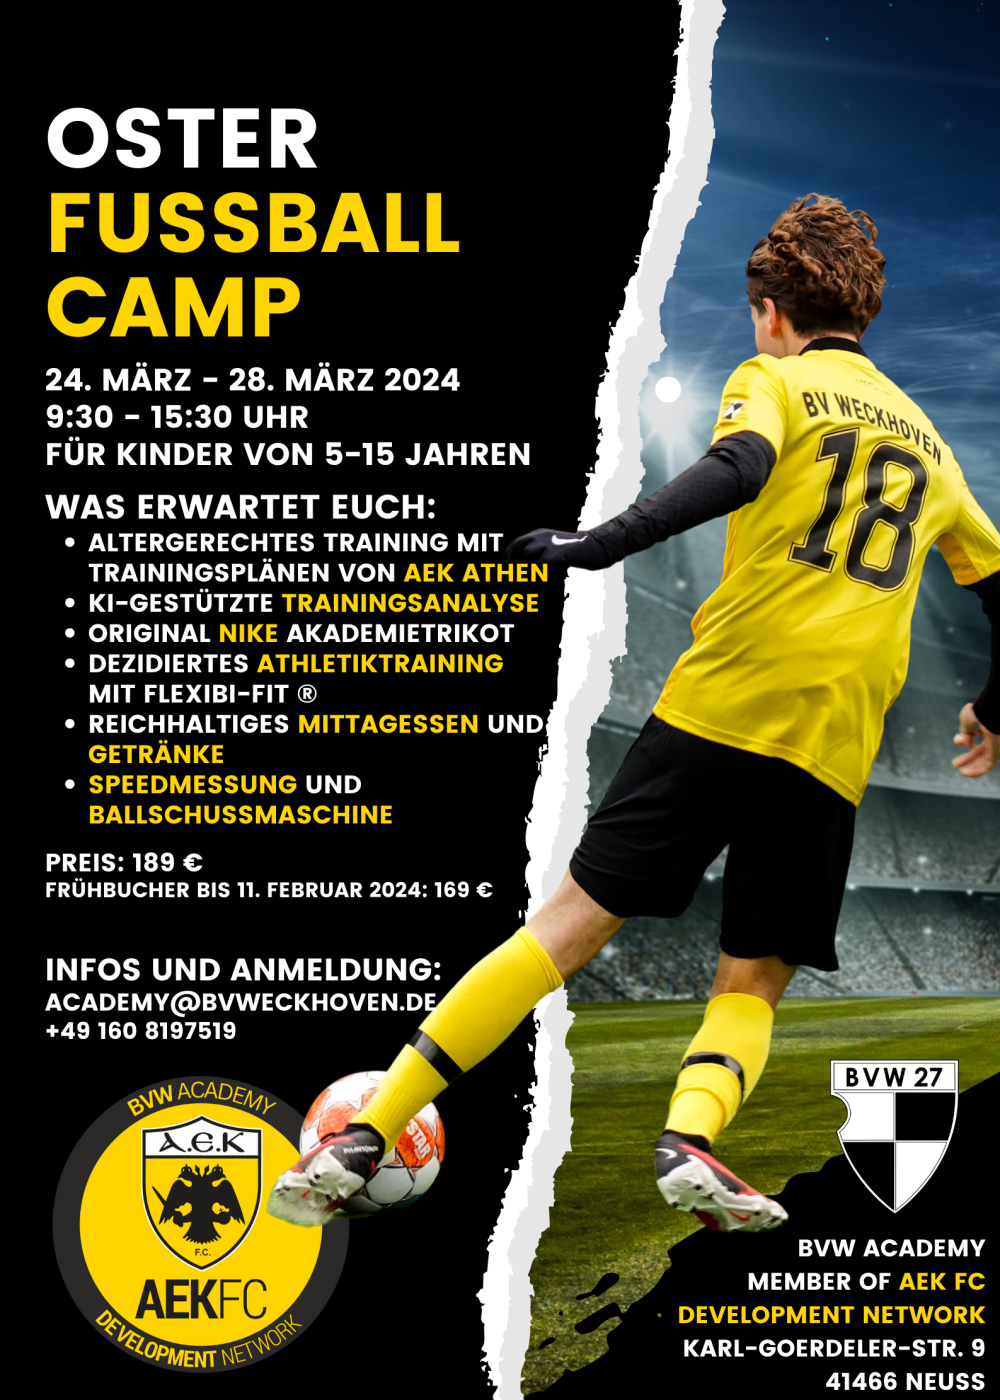 Fußballcamp Ostern 2024 Neuss Düsseldorf